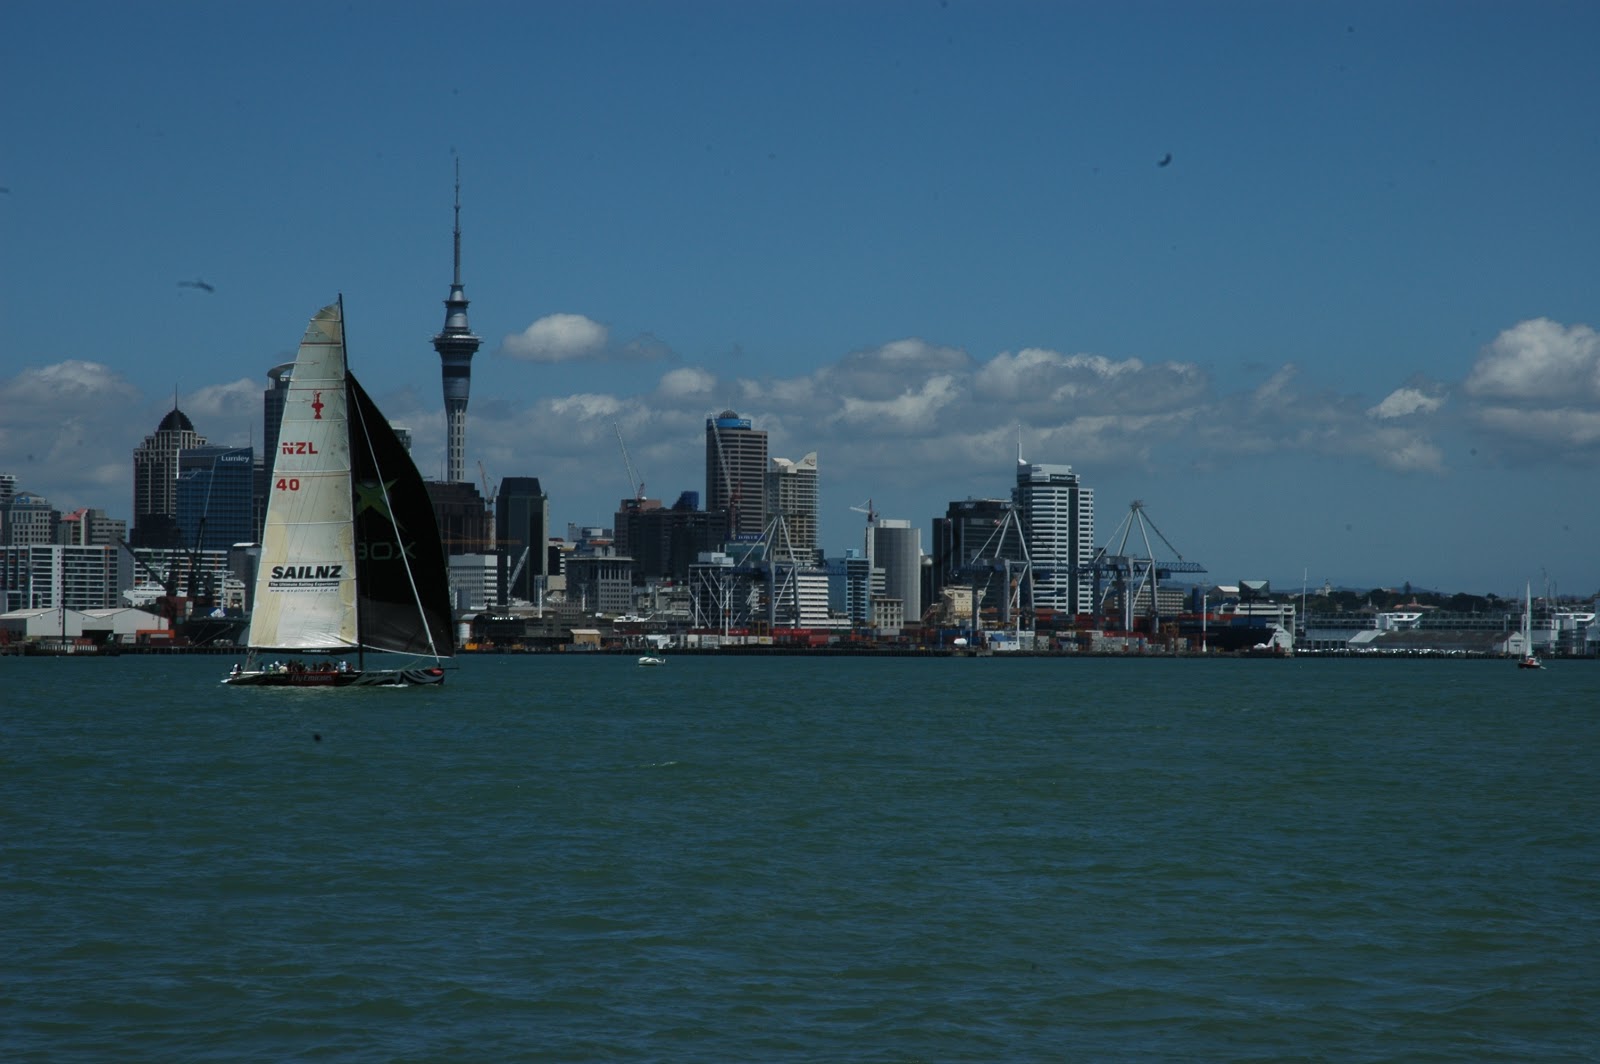 NZL40 cruising in front of Auckland Harbor